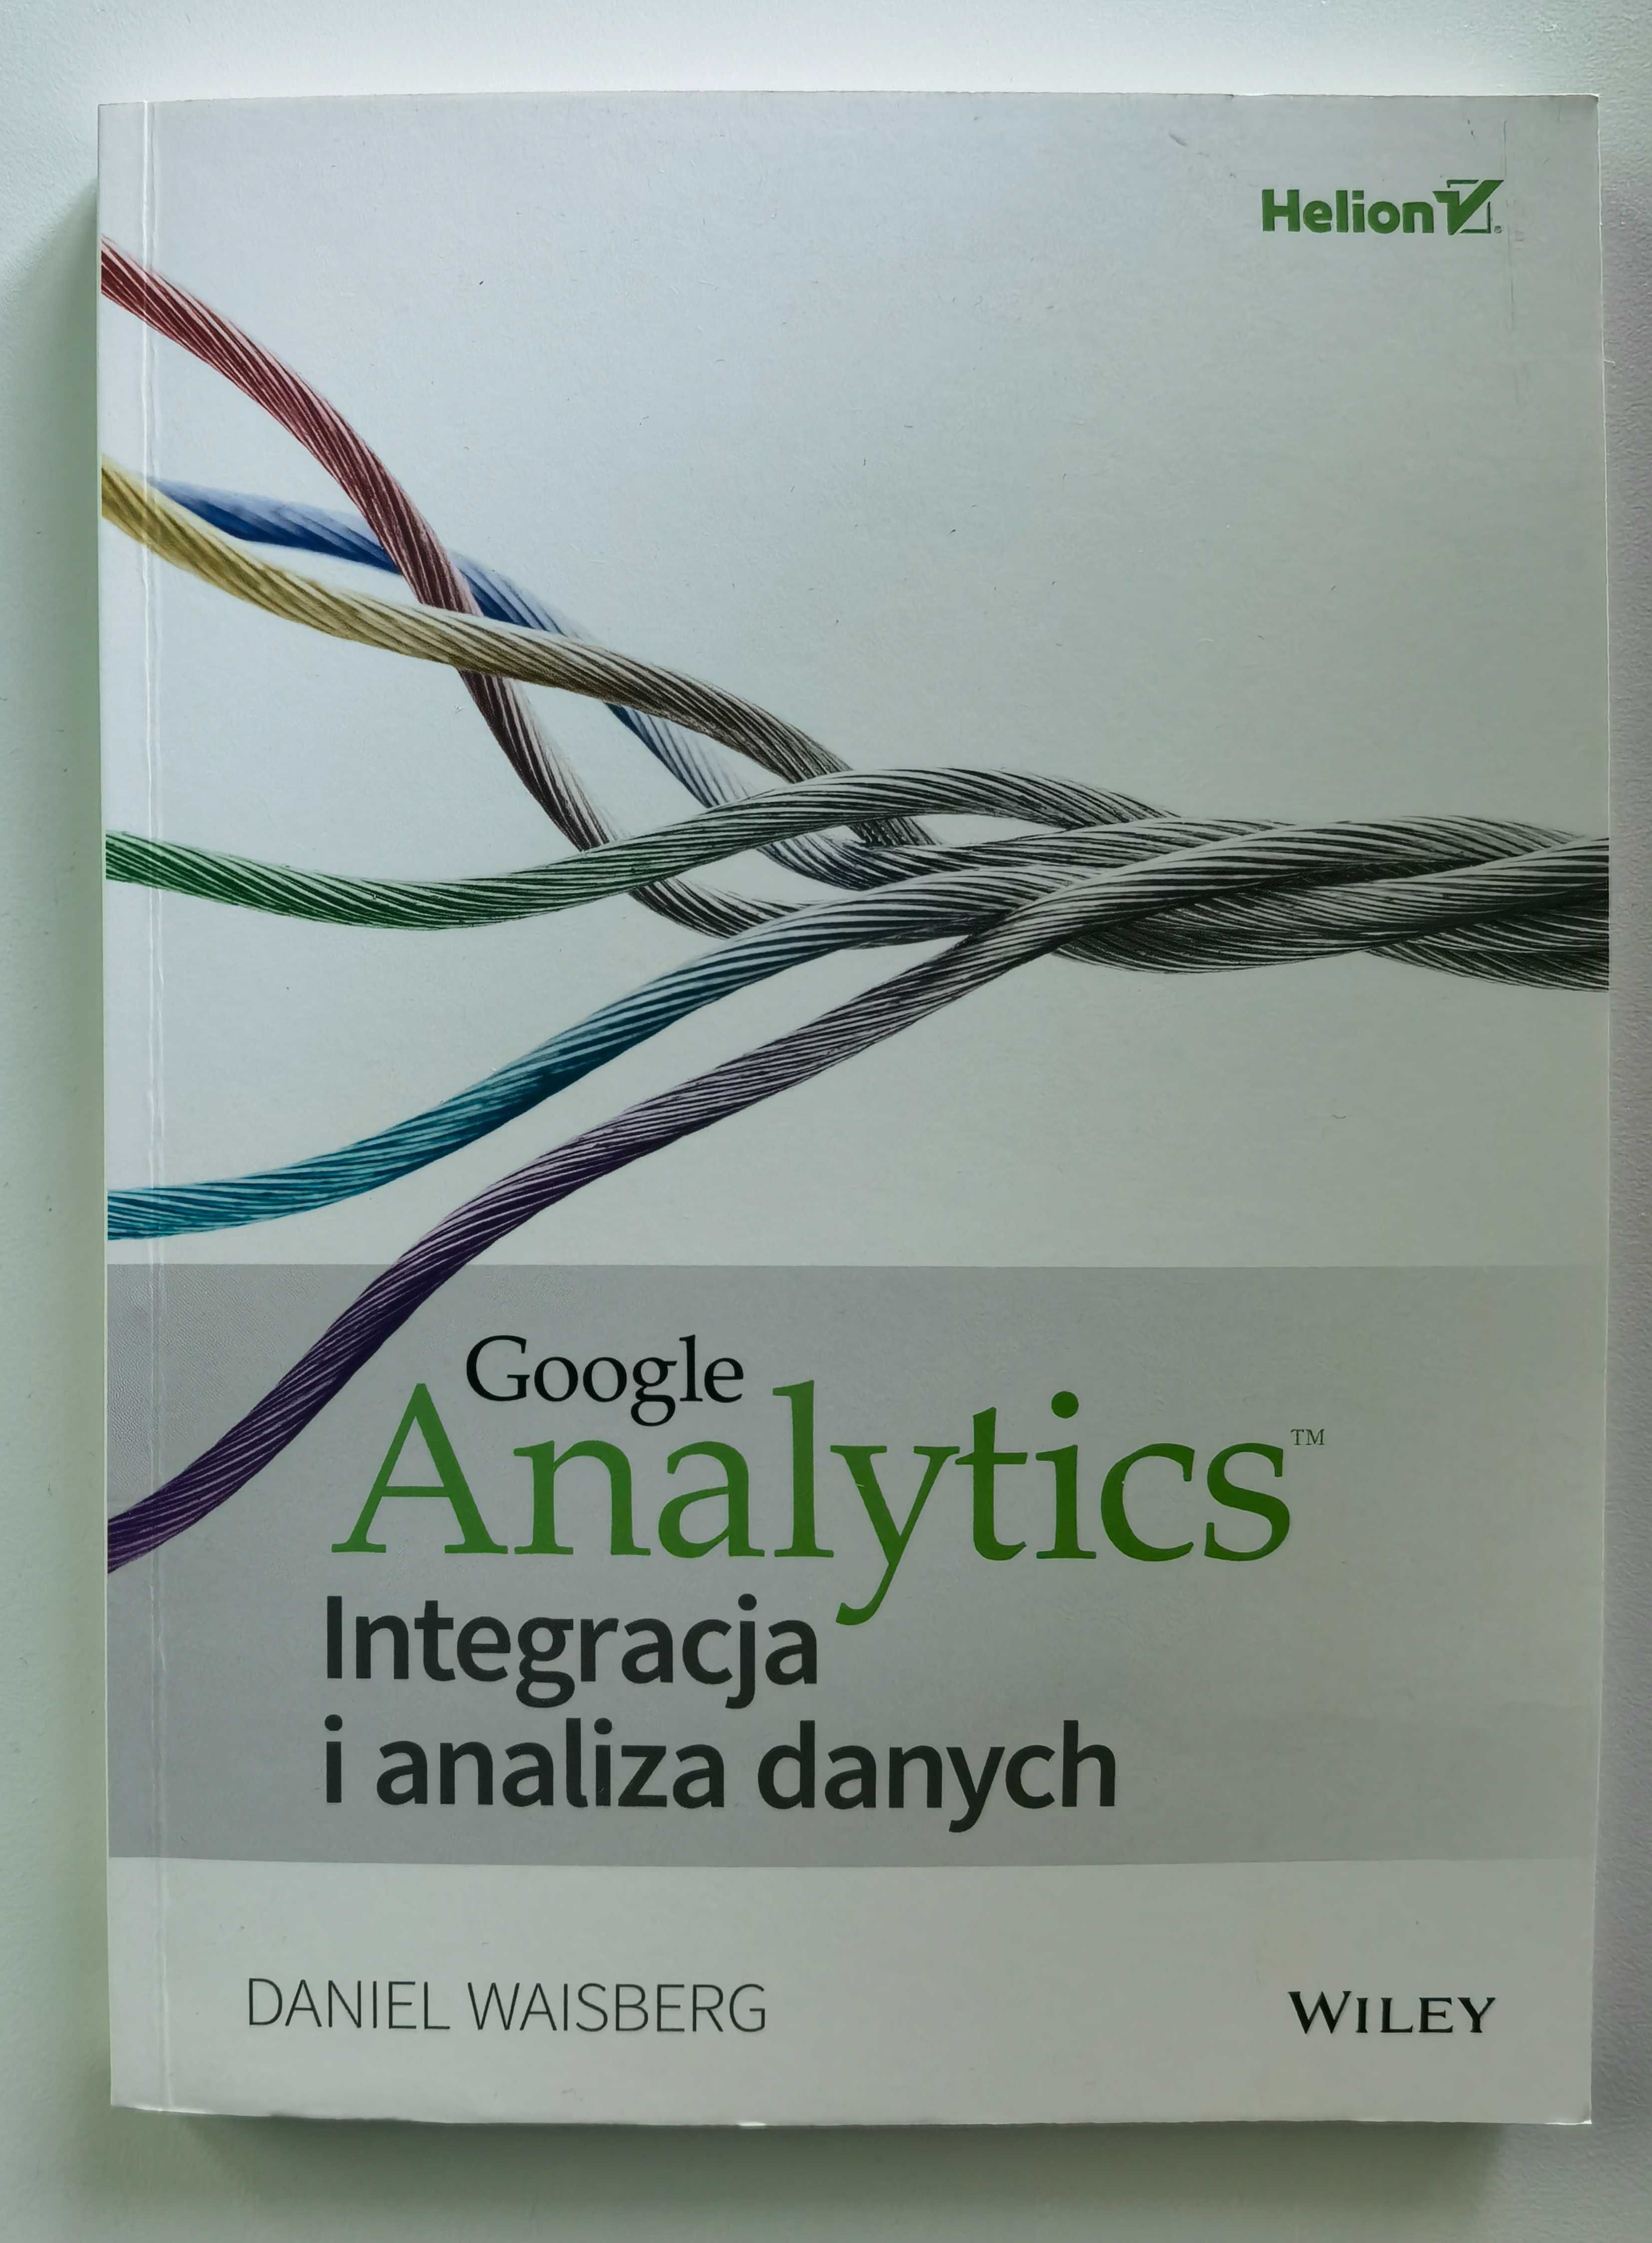 Google Analytics. Integracja i analiza danych. D. Waisberg.